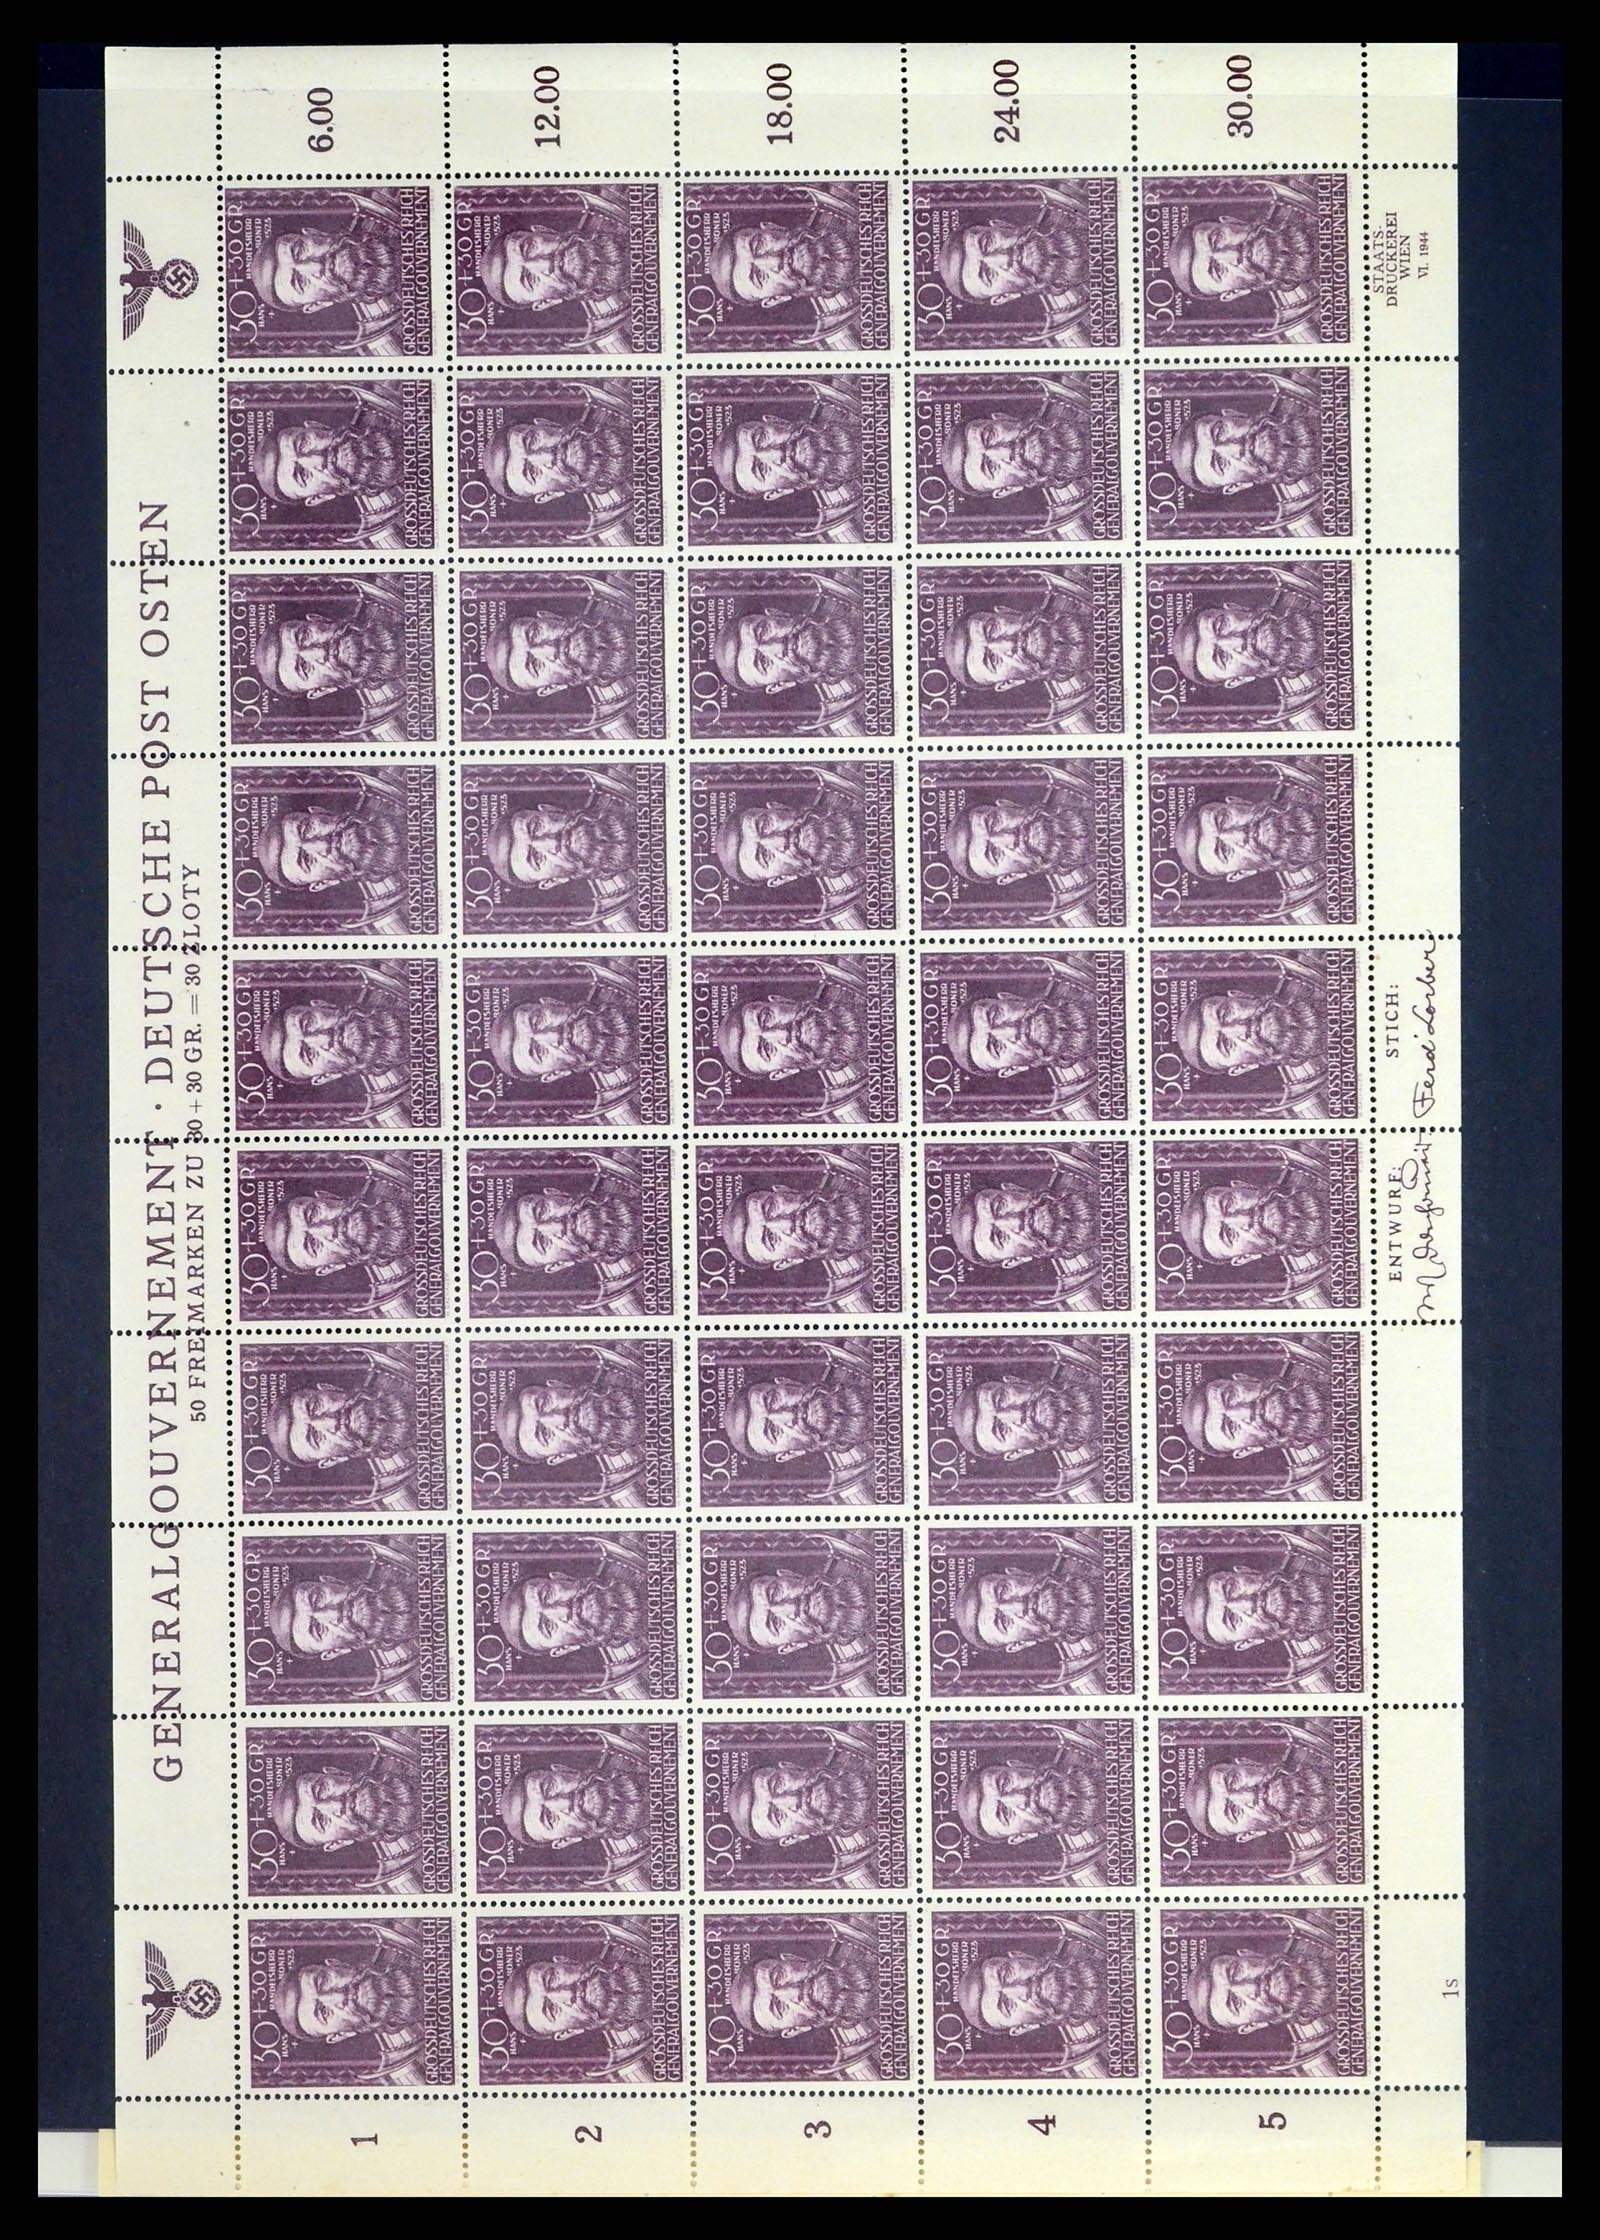 37535 059 - Stamp collection 37535 German occupation second worldwar 1939-1945.